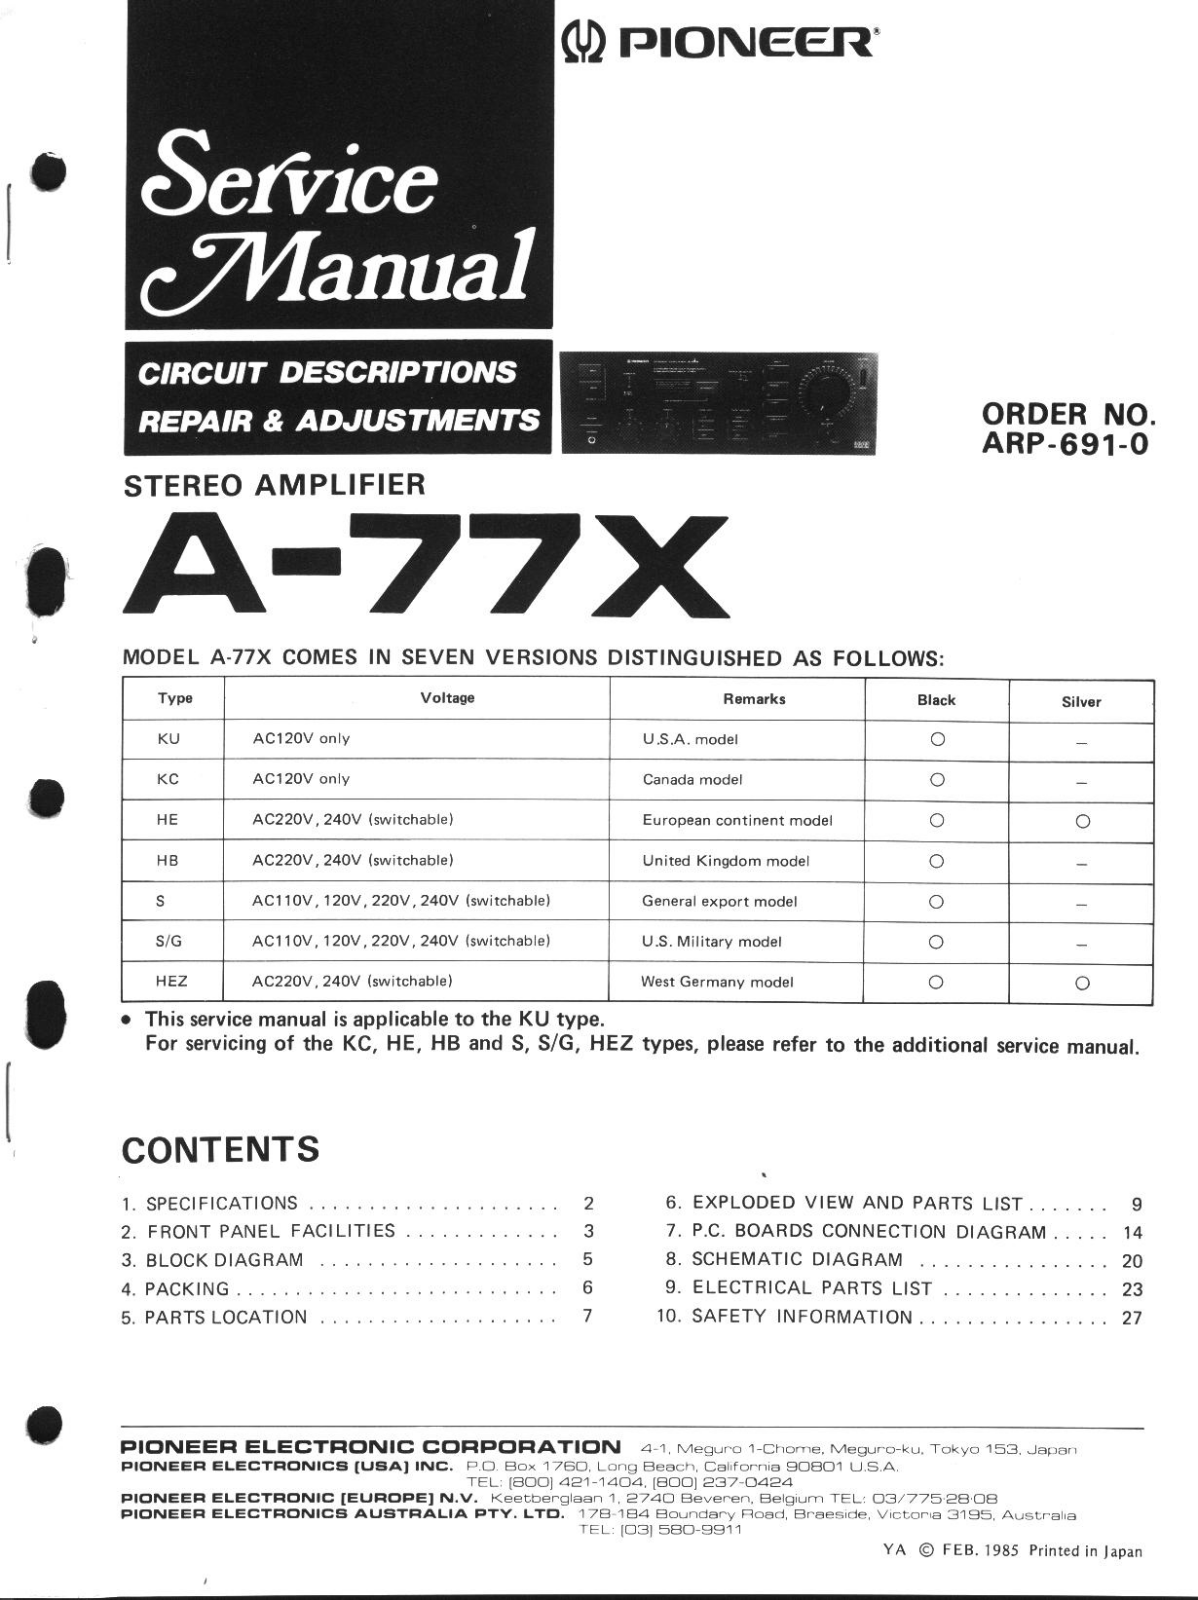 Pioneer A-77-X Service manual